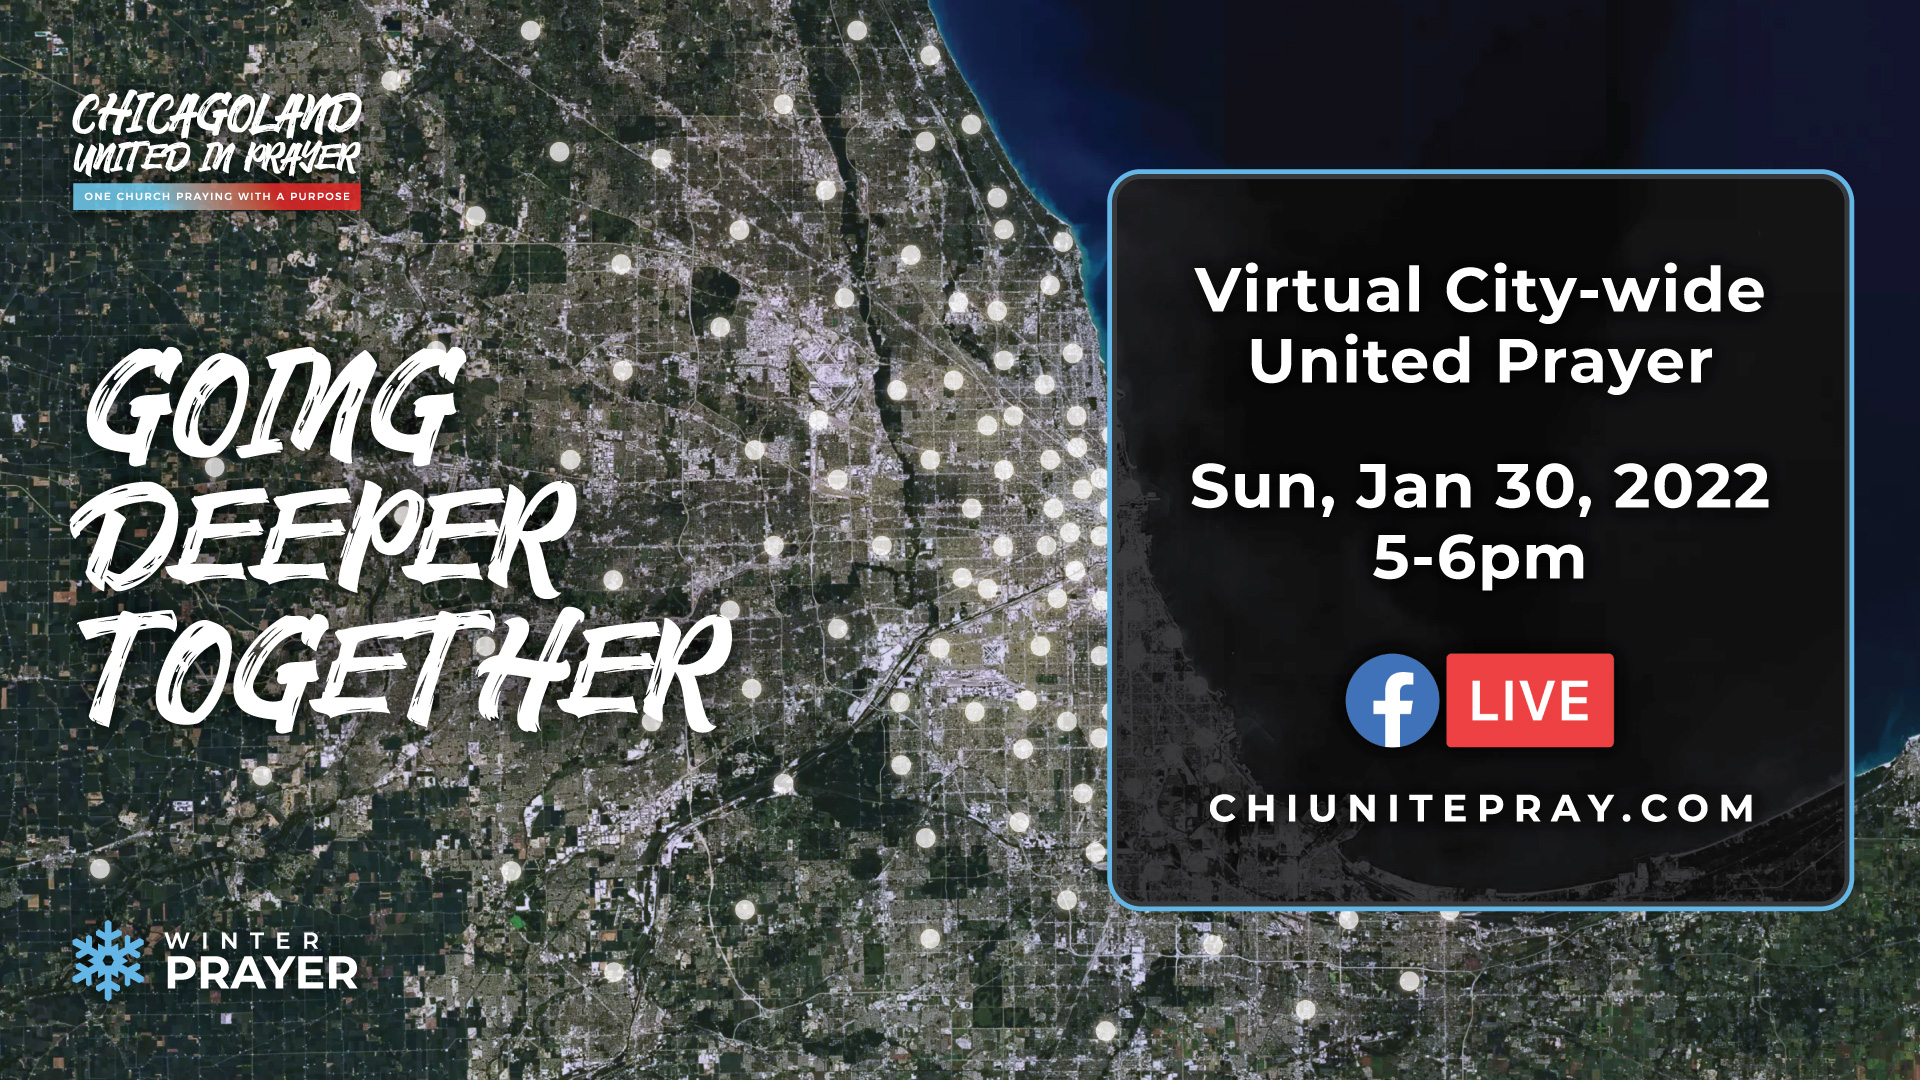 Chicagoland United in Prayer 2022 [Virtual]